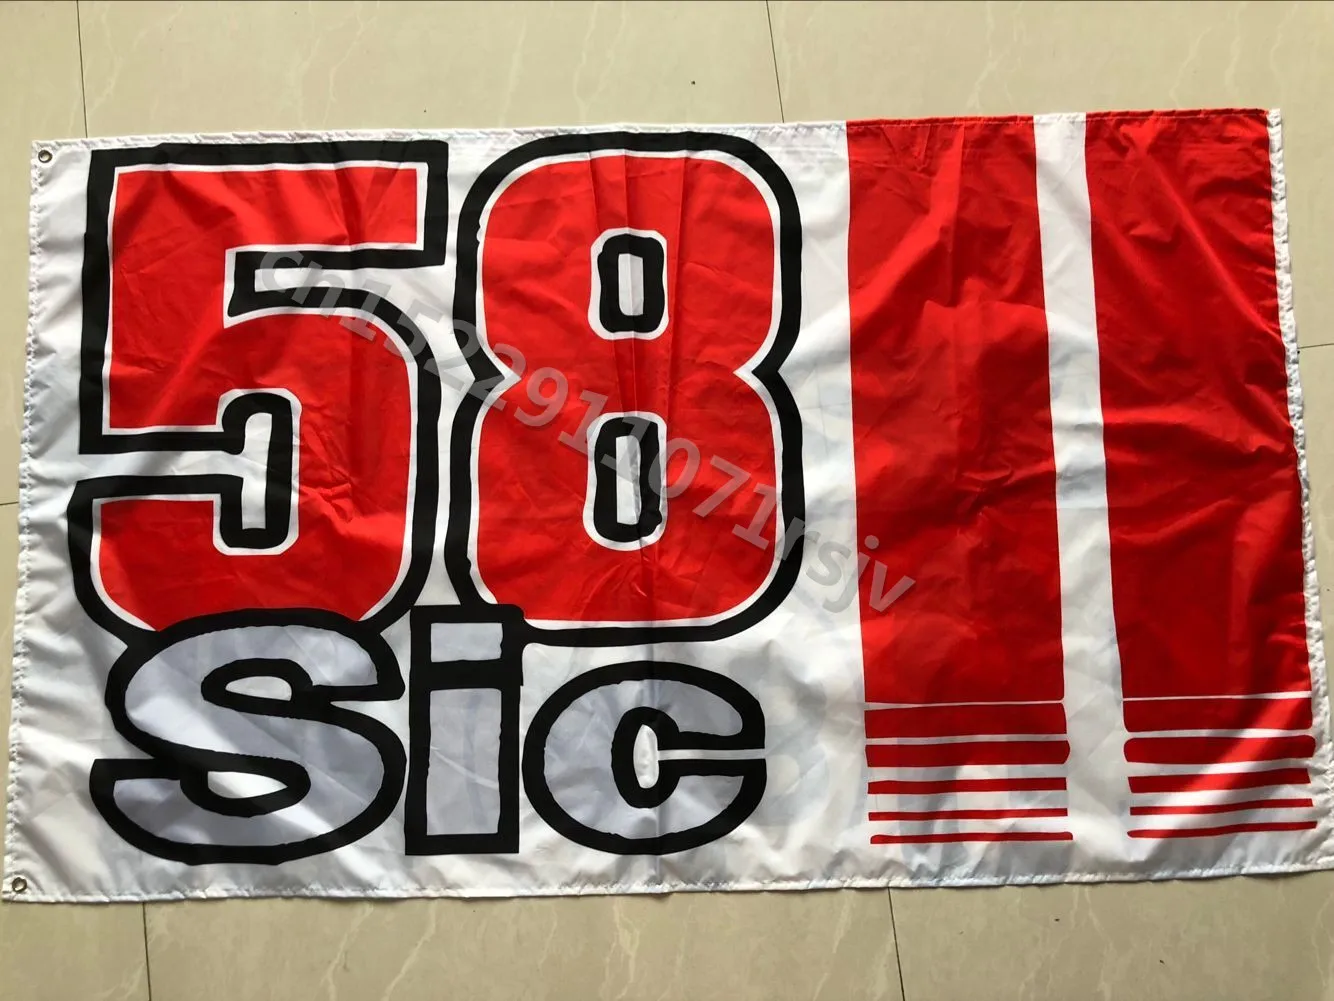 

3ft x 5ft3 x5ft Marco simoncelli 58 flag banner print Polyester banner flag Size 150*90cm